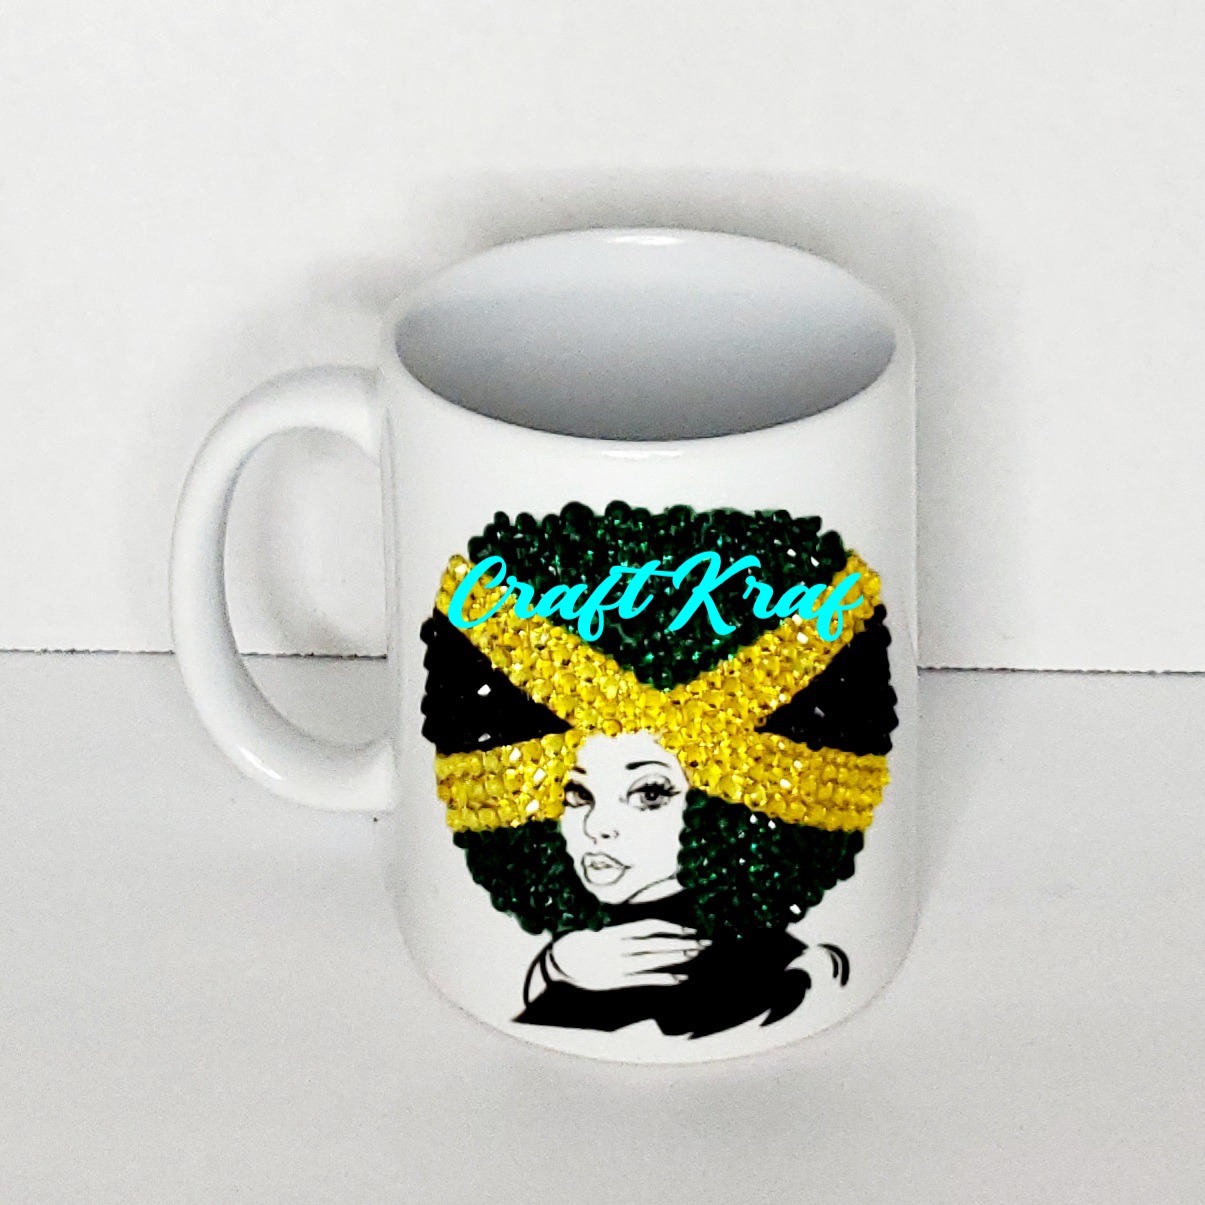 Jamaica bling mug watermark